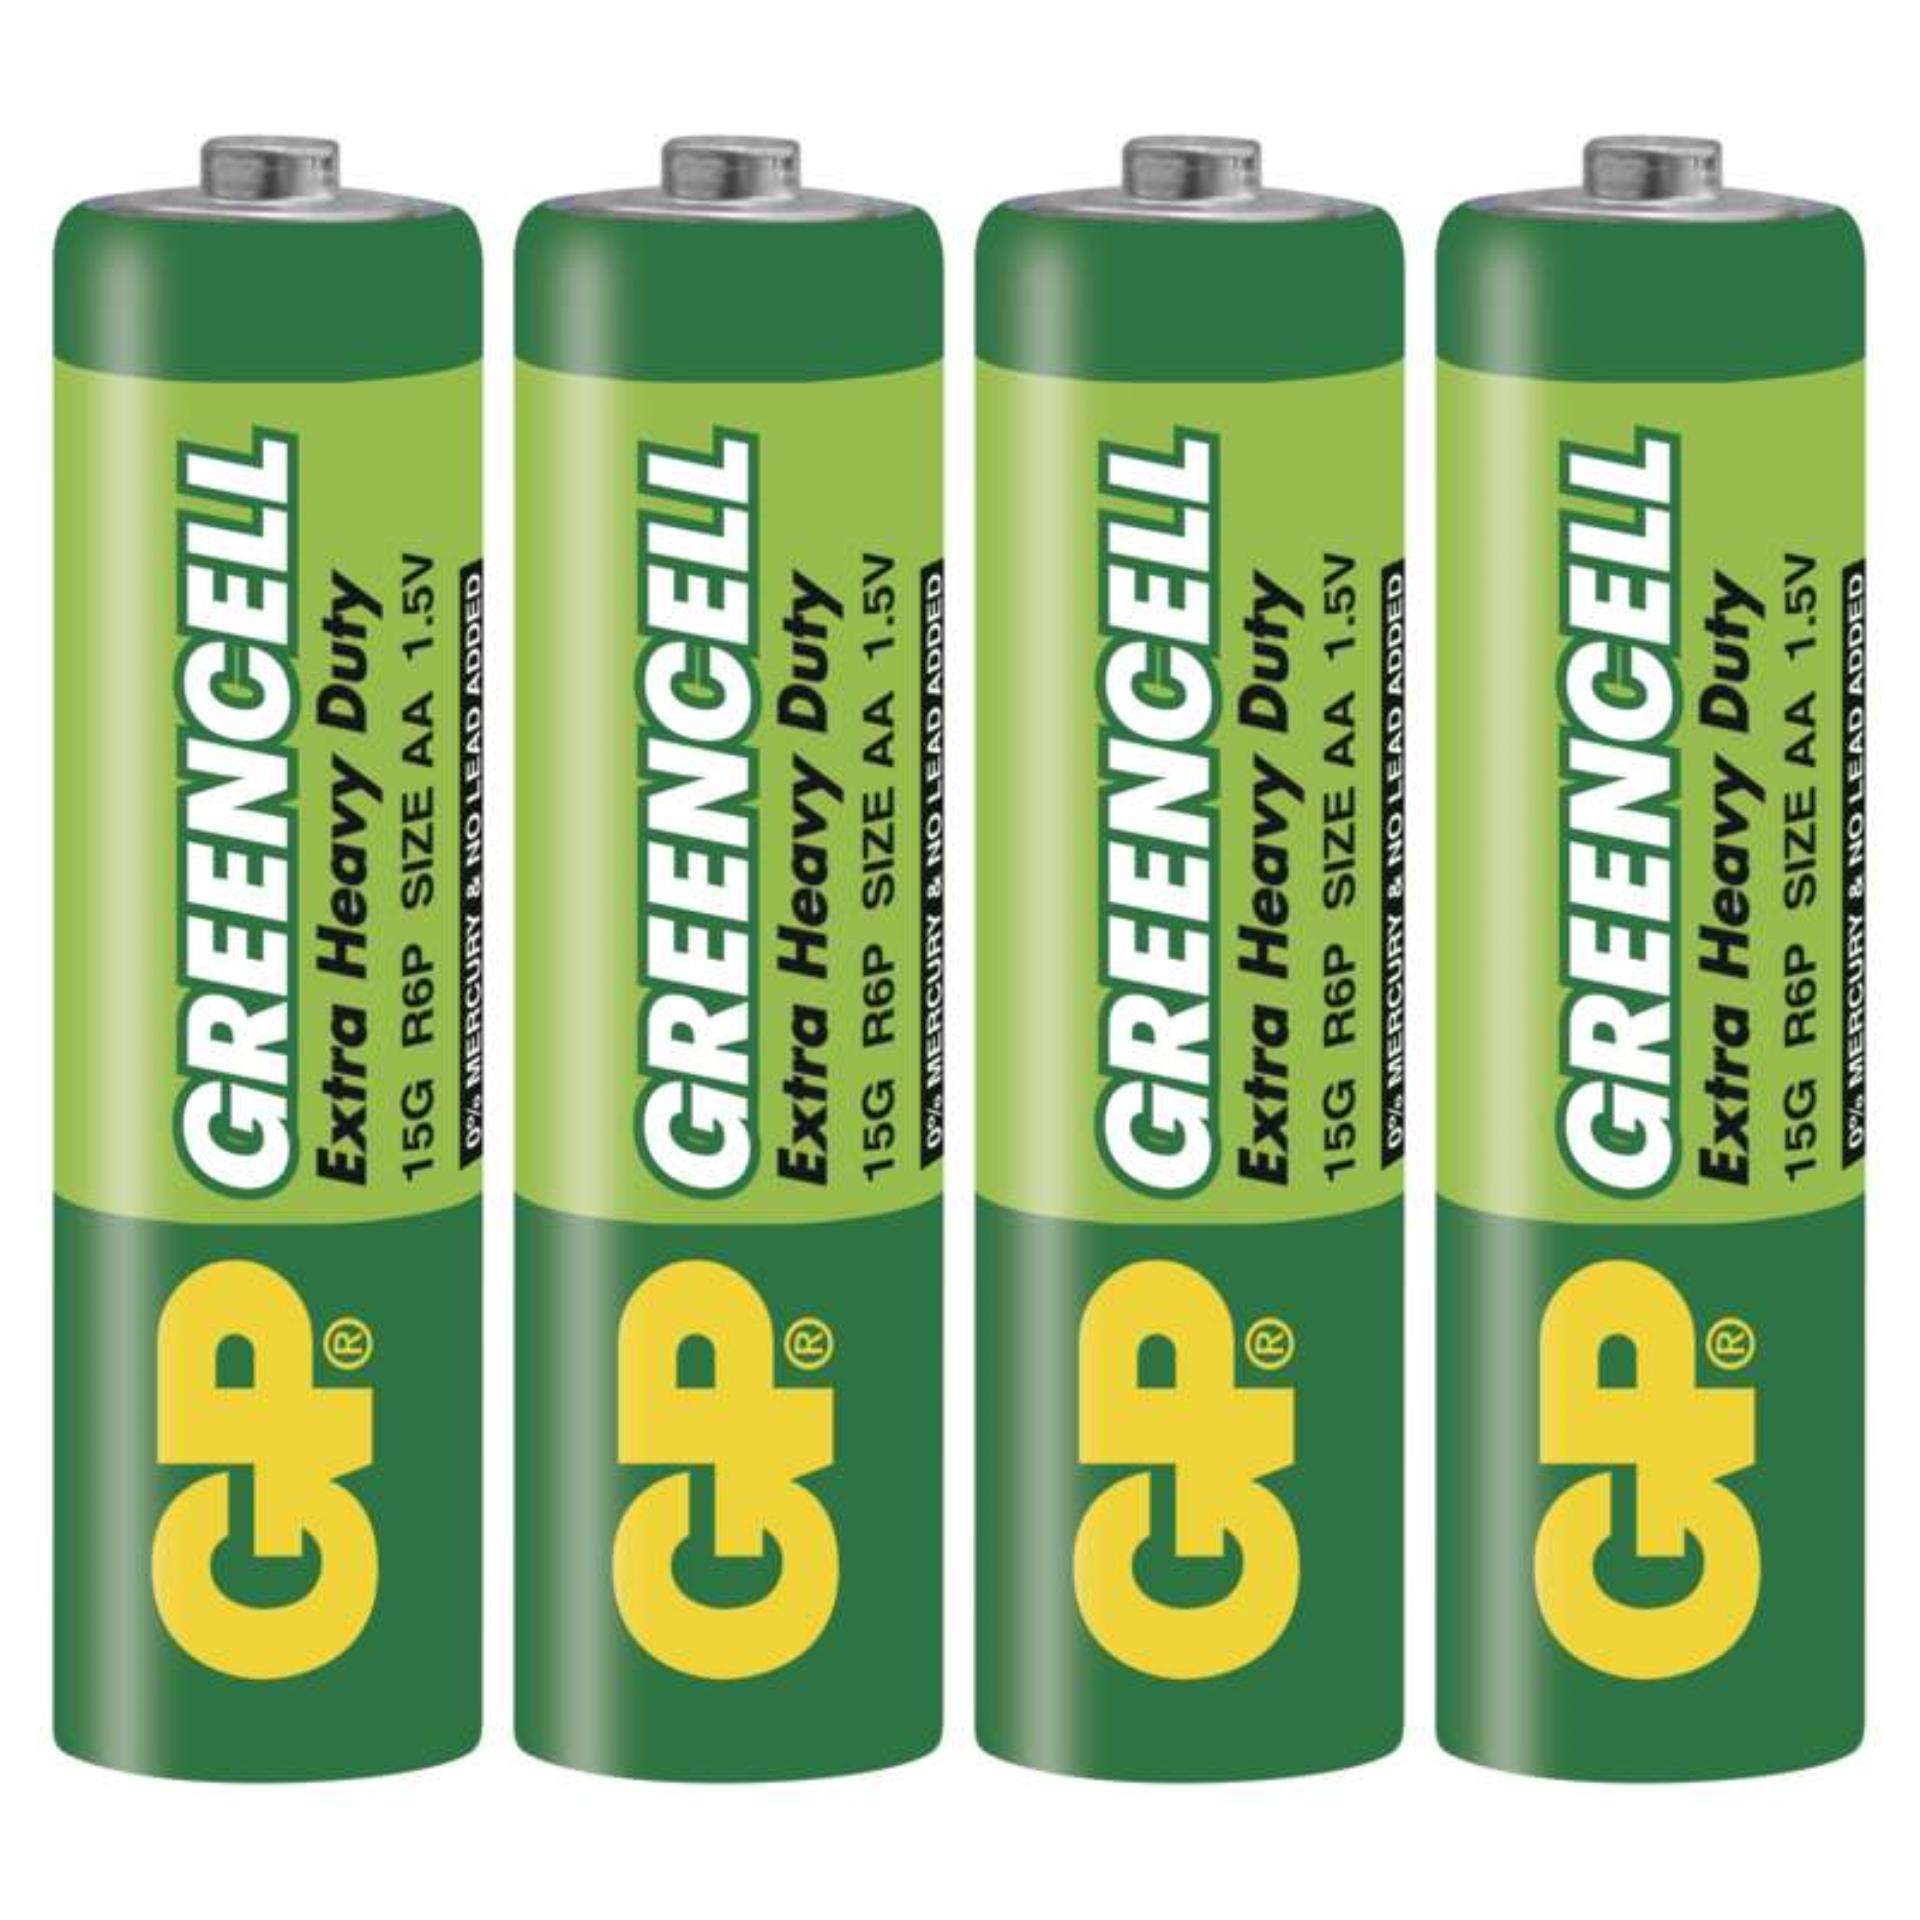 Baterie GP Greencell 1,5 V, R6, typ AA, 4 ks